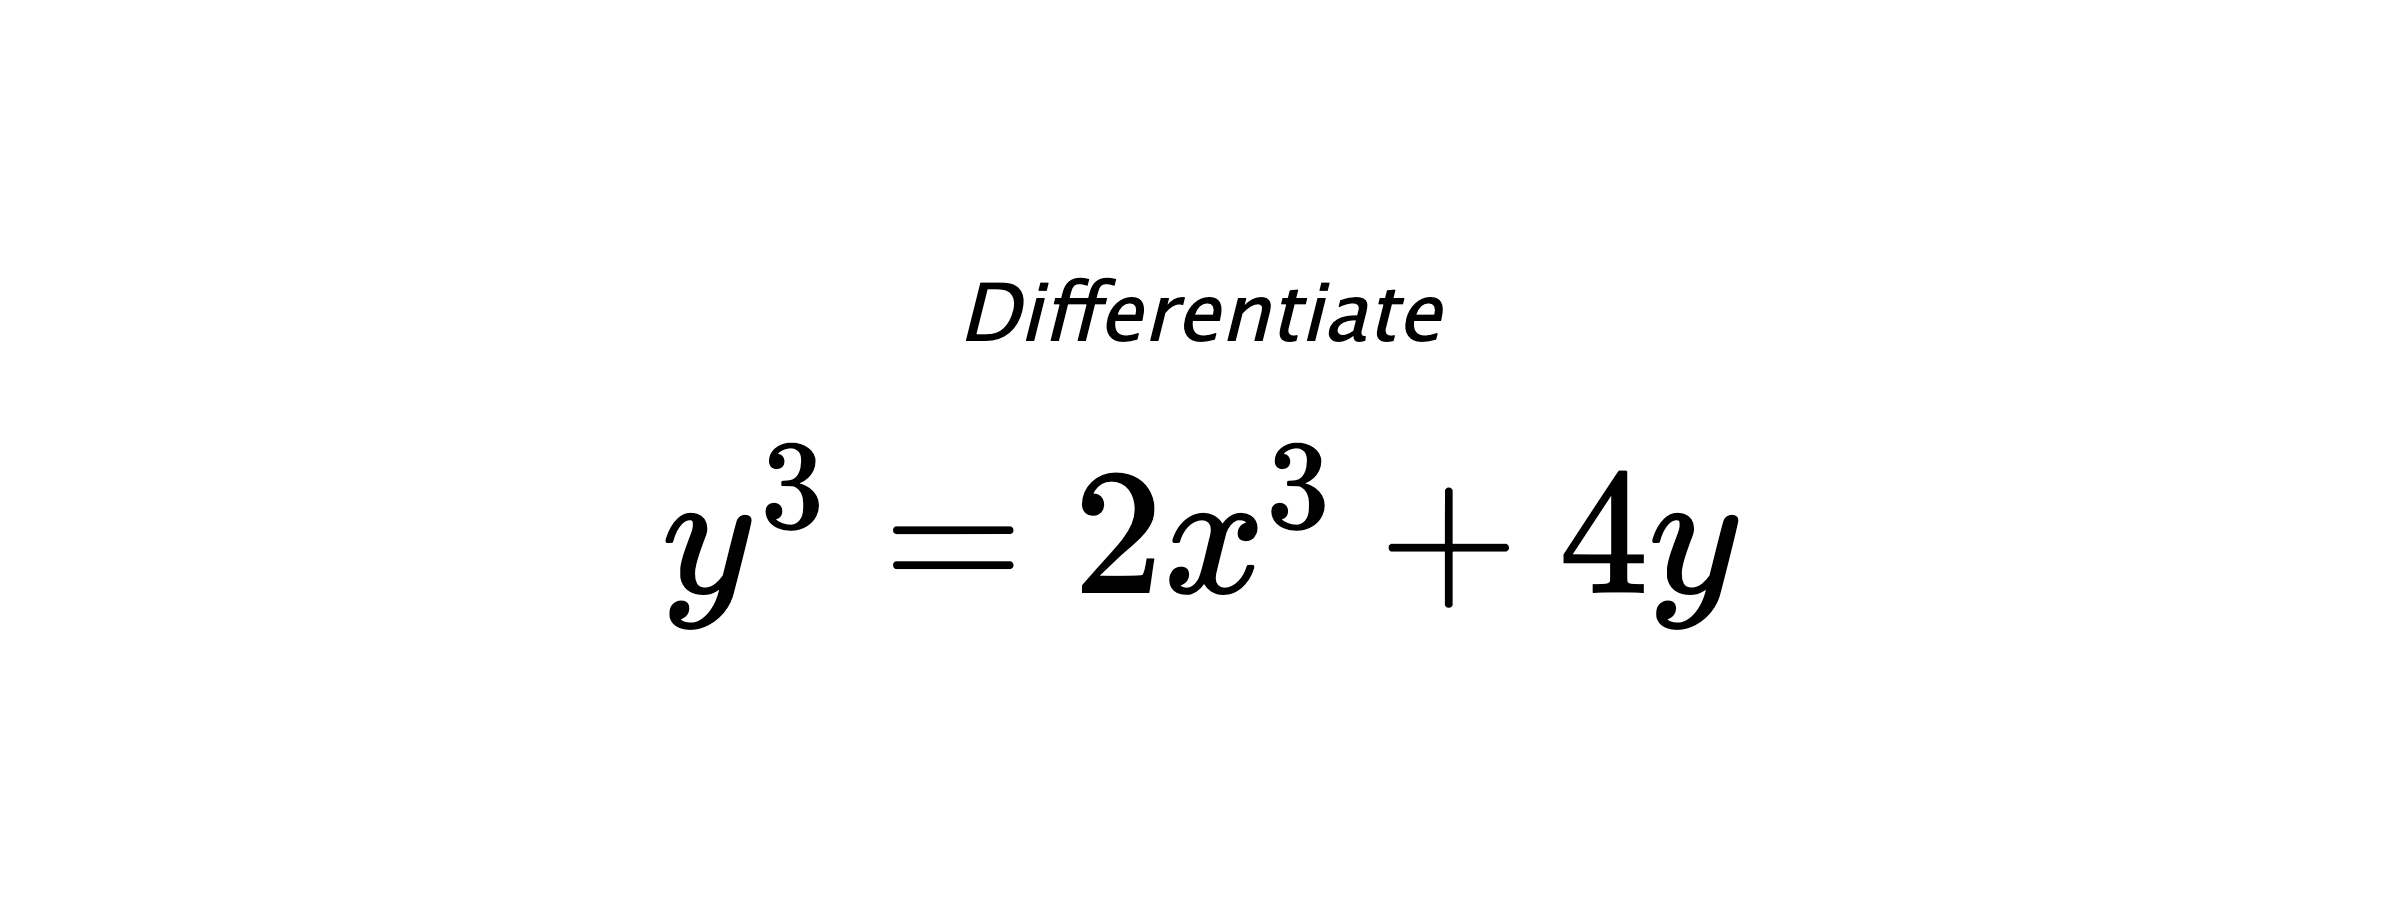 Differentiate $ y^3 = 2x^3+4y $